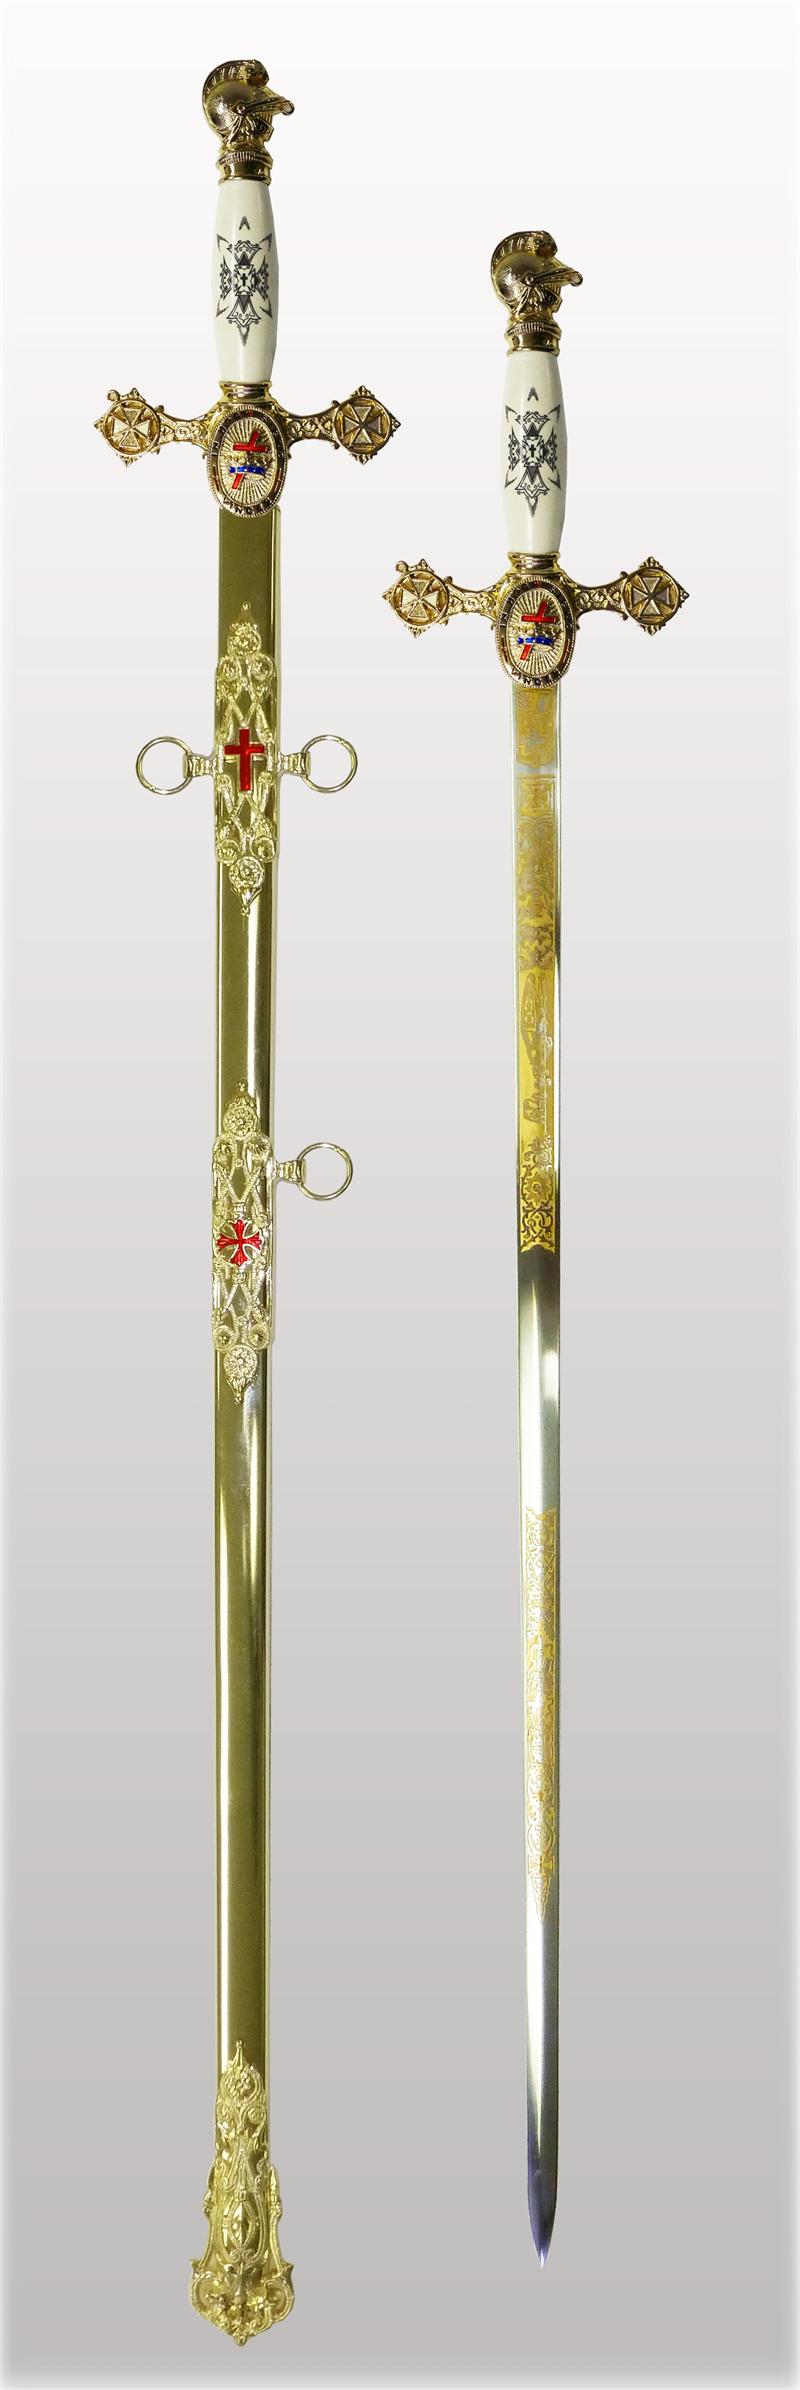 The Golden Sword by Janet E. Morris